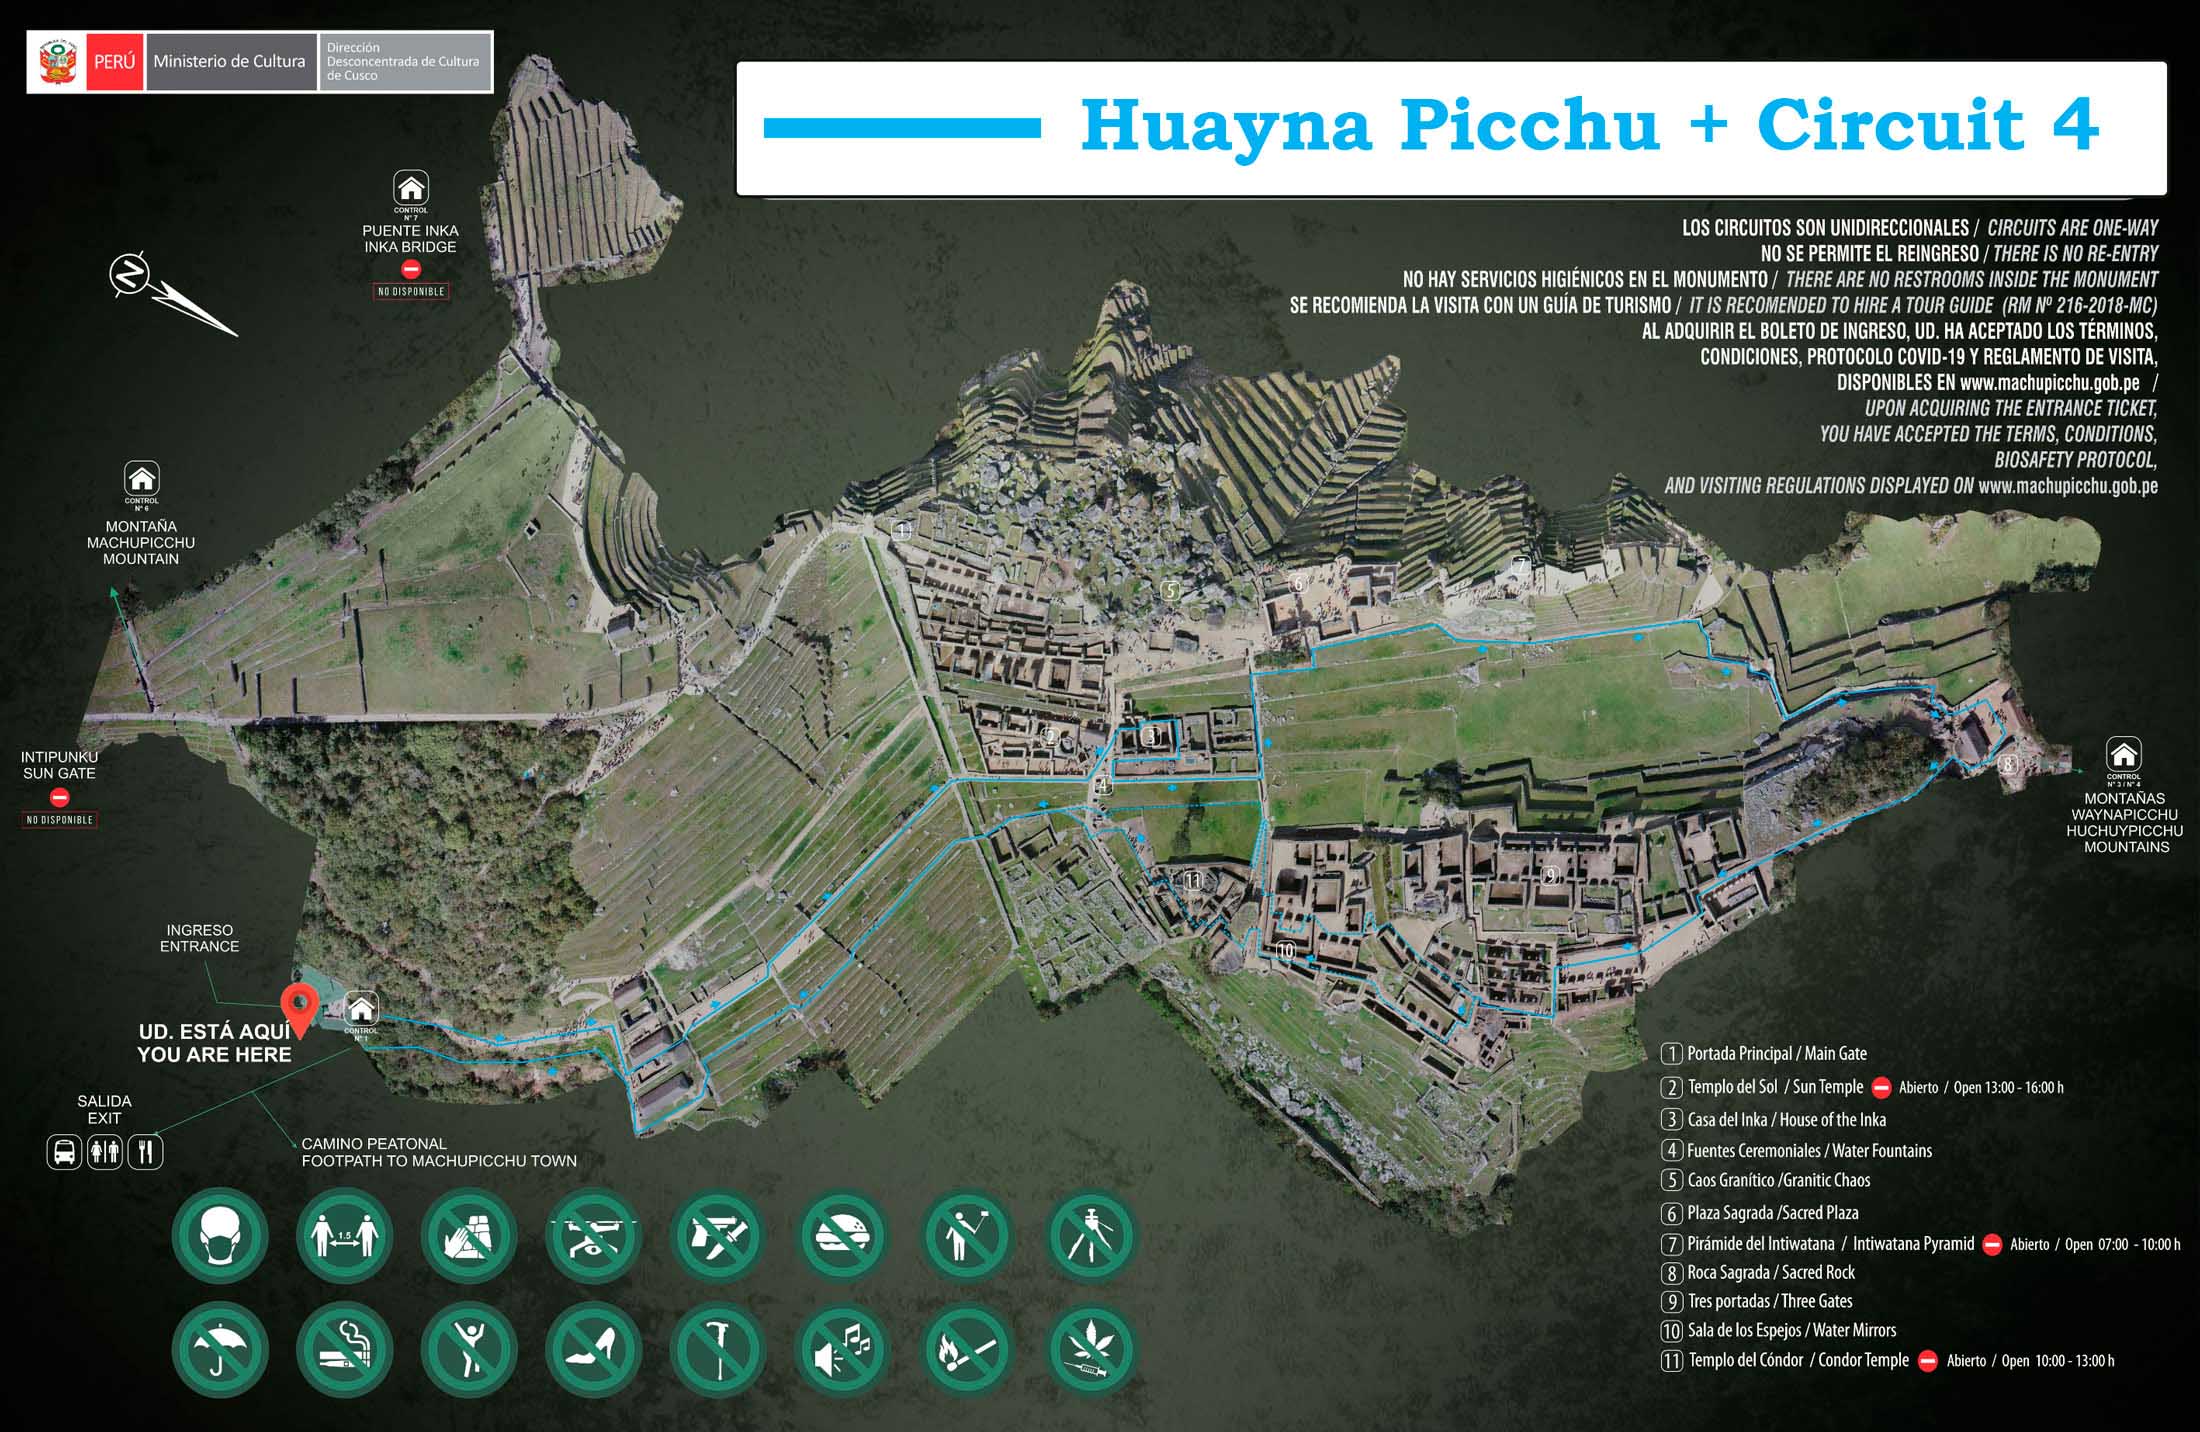 Huayna Picchu tickets + Circuit 4